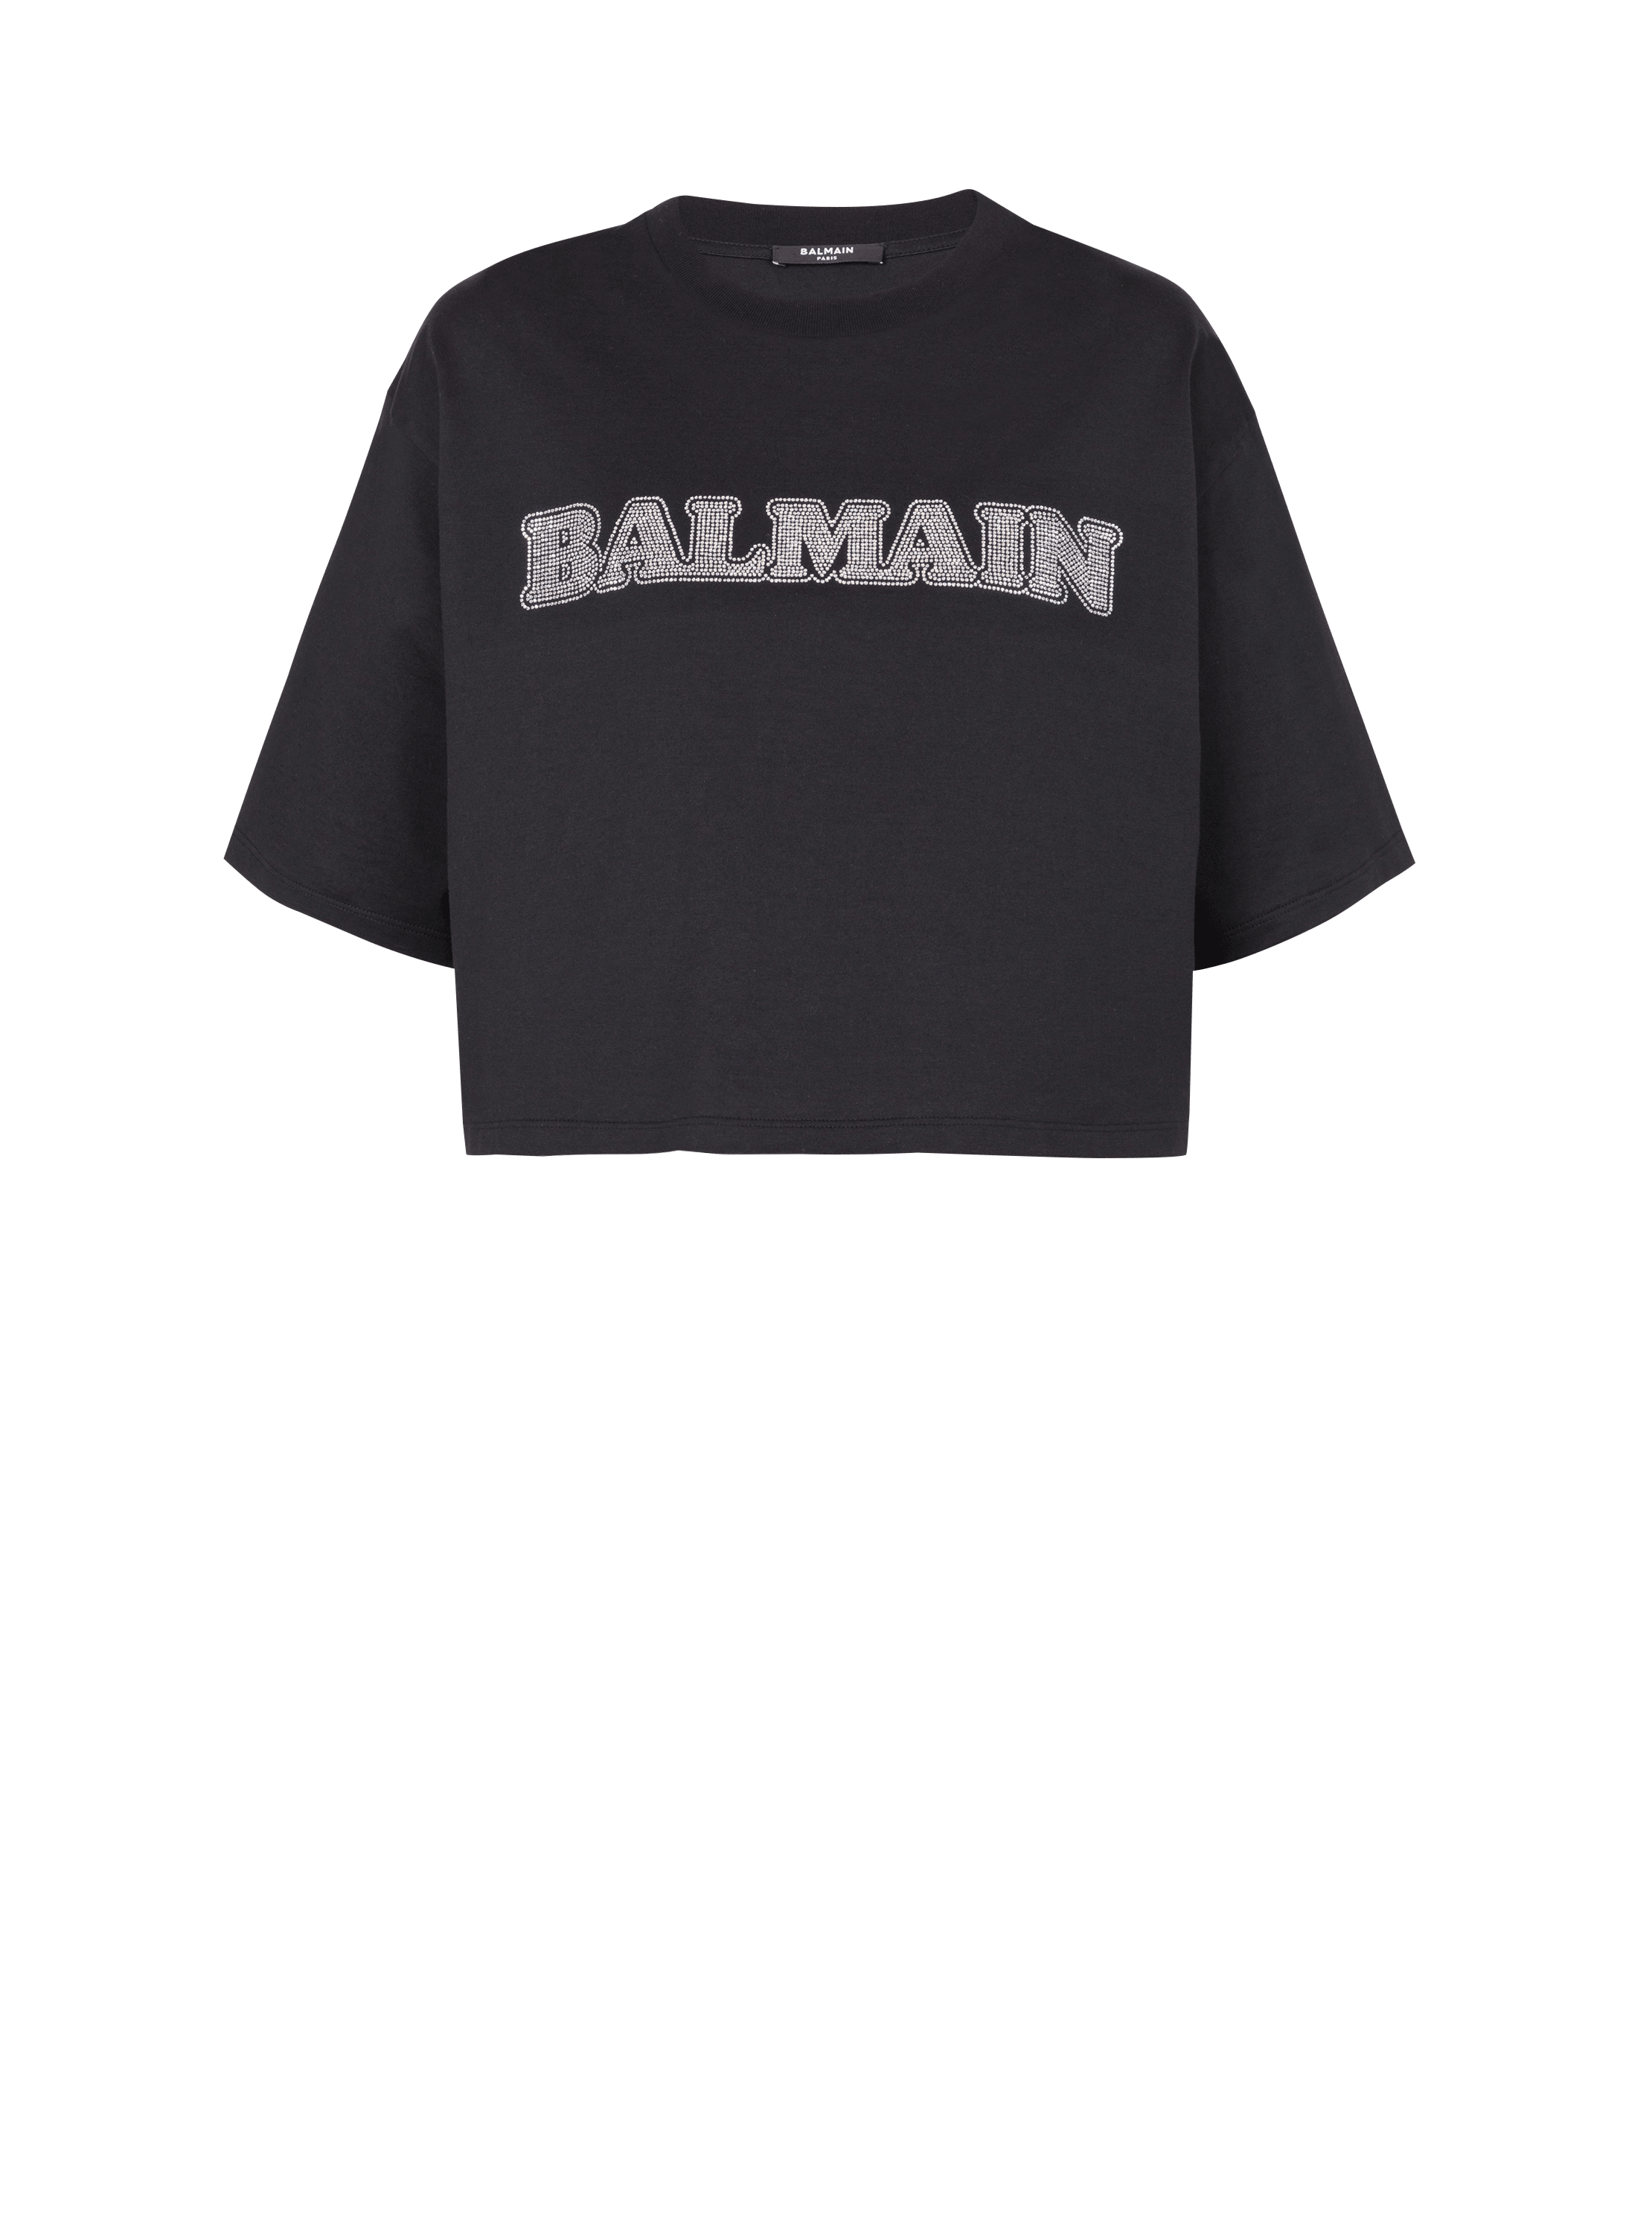 Cropped rhinestone Balmain T-shirt